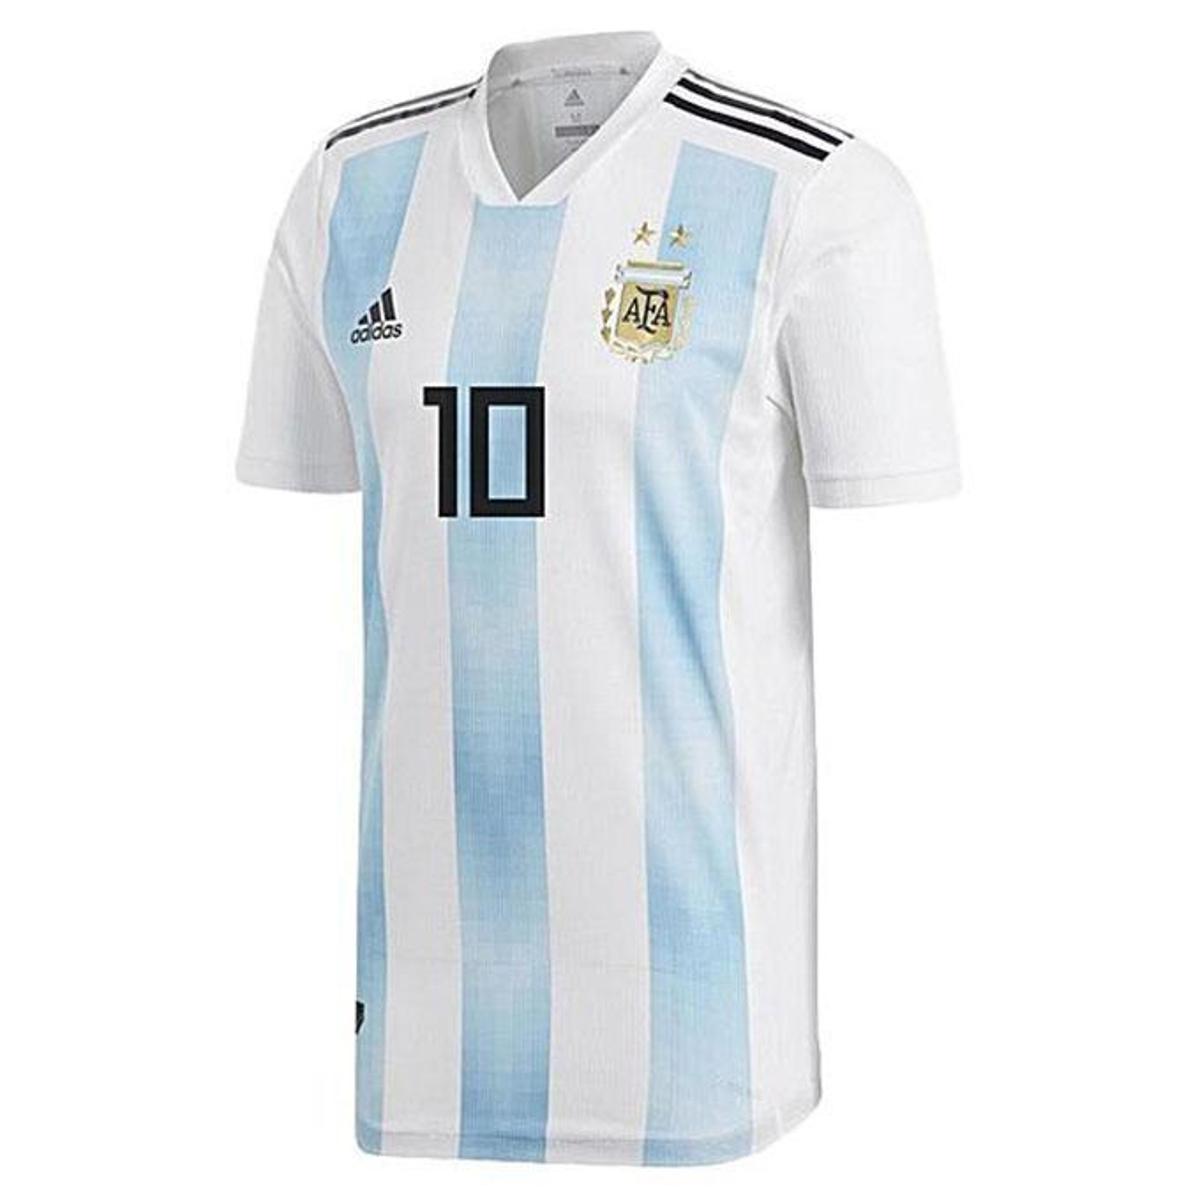 adidas argentina jersey messi